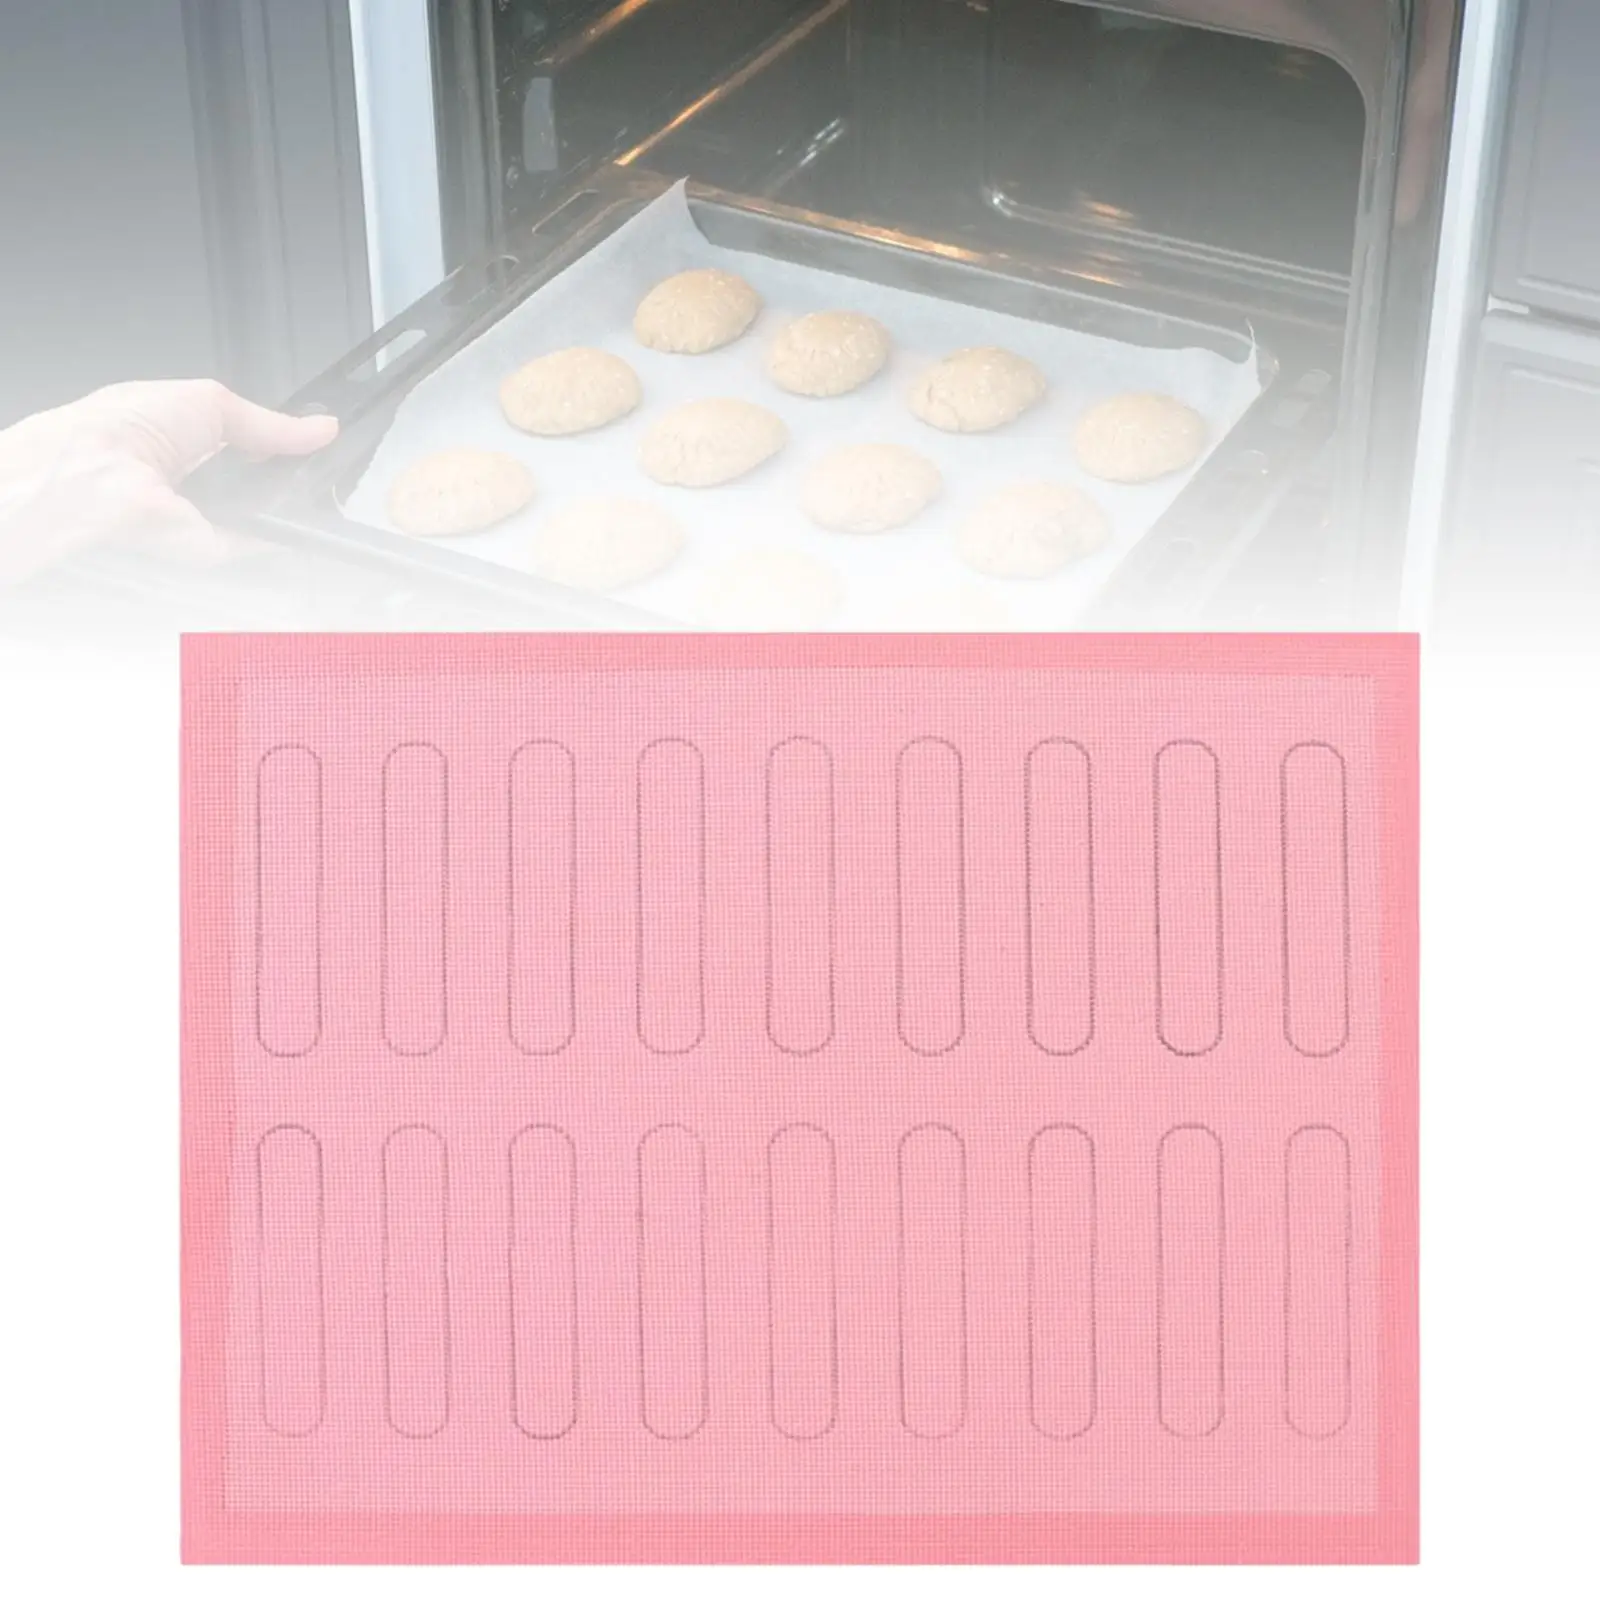 Silicone Baking Mat Reusable Cake Pan Mat Baking Supplies Bakeware Mat Heat Resistant Oven Liner Baking Sheet for Home Kitchen